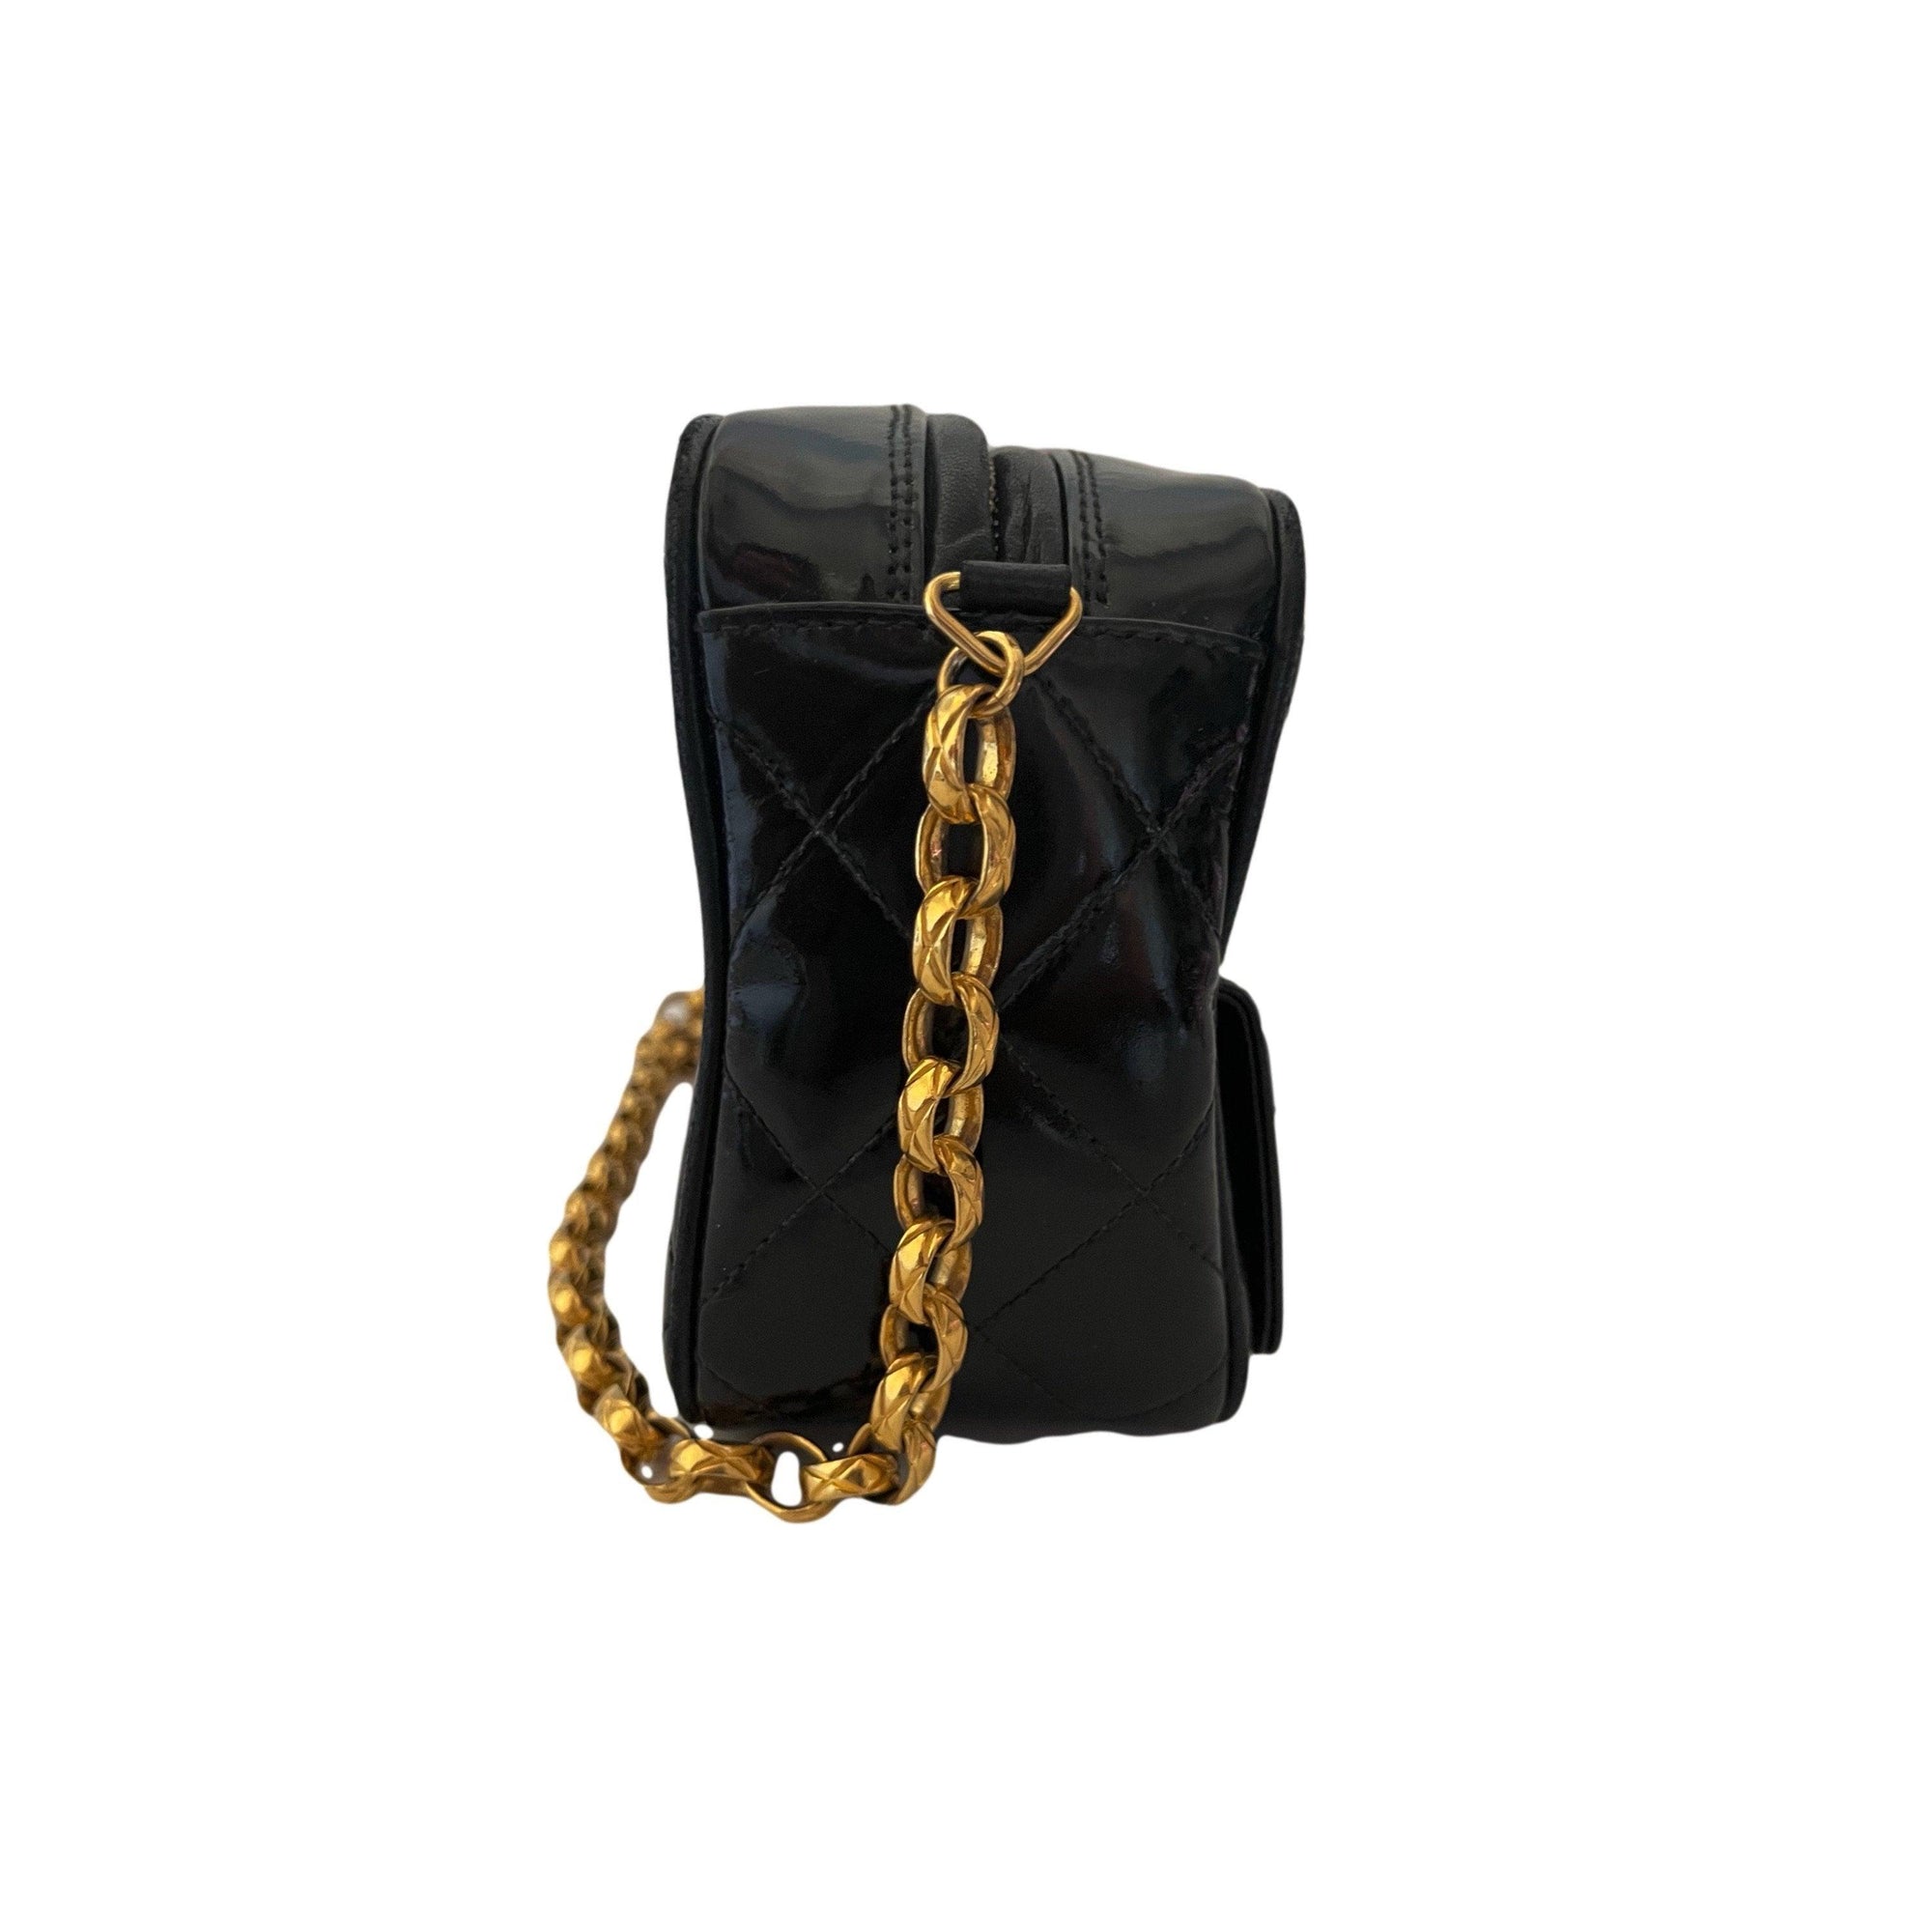 Chanel Black Patent Leather Camera Bag - Handbags